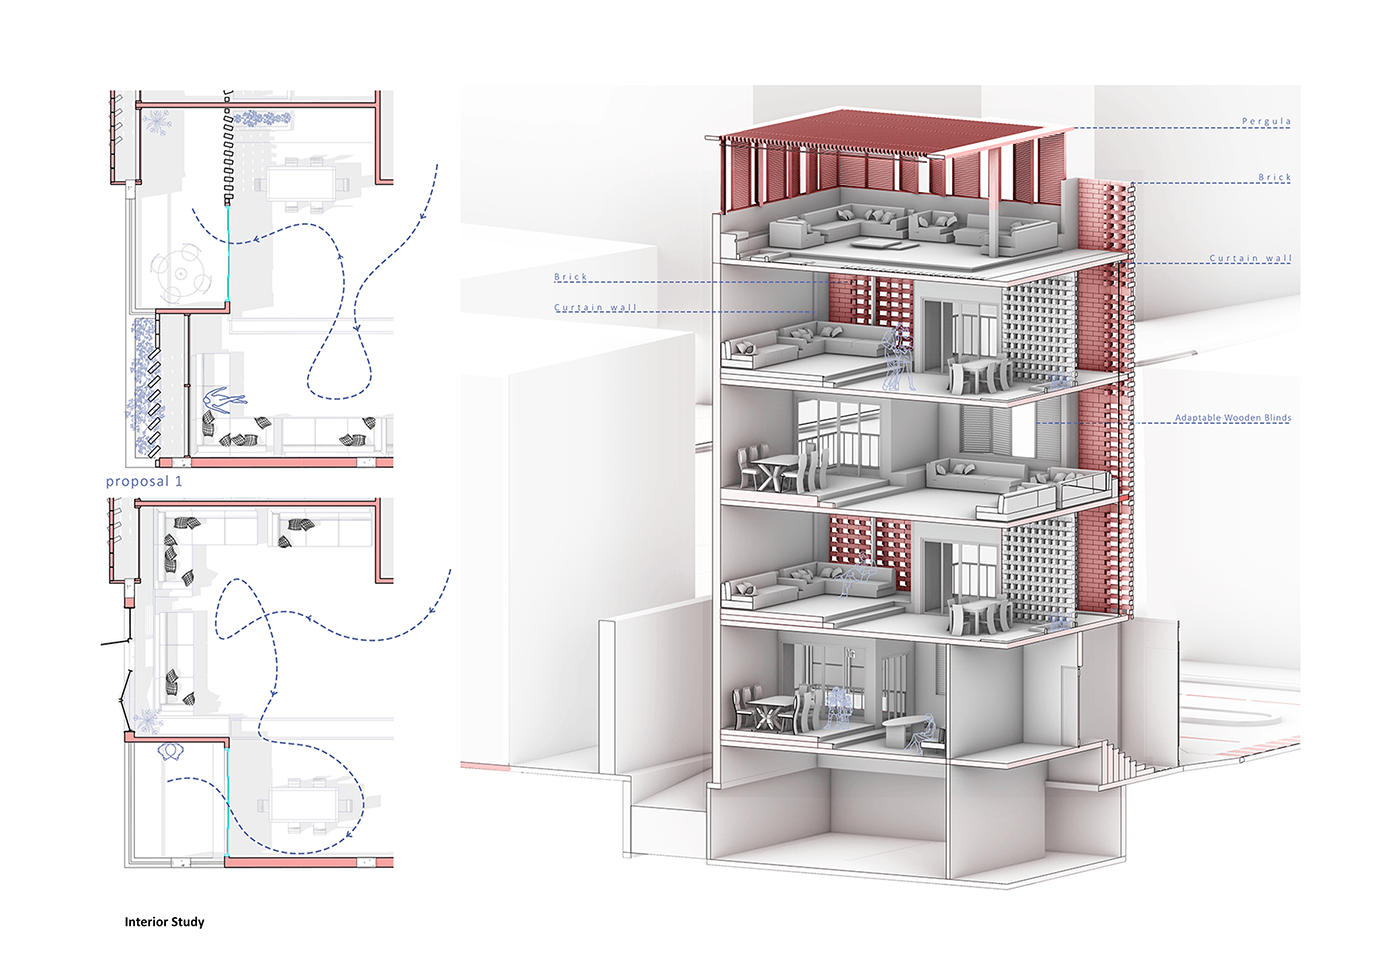 design 3dmodeling visualization Rhinoceros Grasshopper corona render  architecture exterior Render archviz